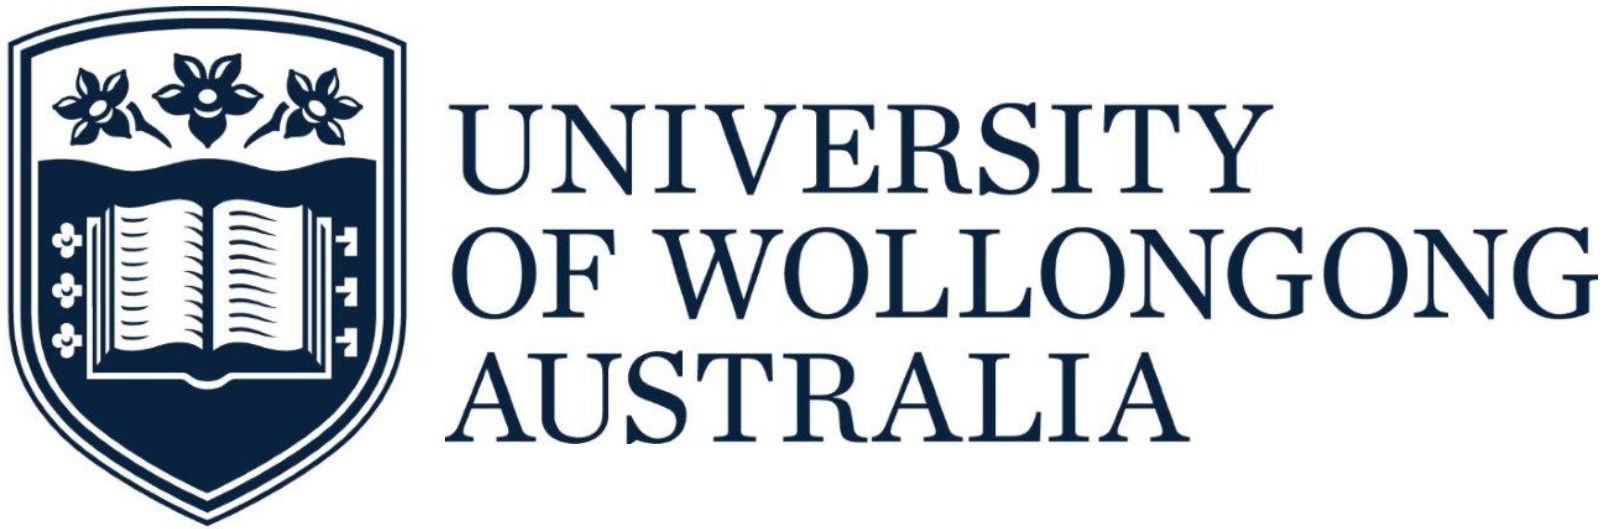 University of Wollongong, NWS